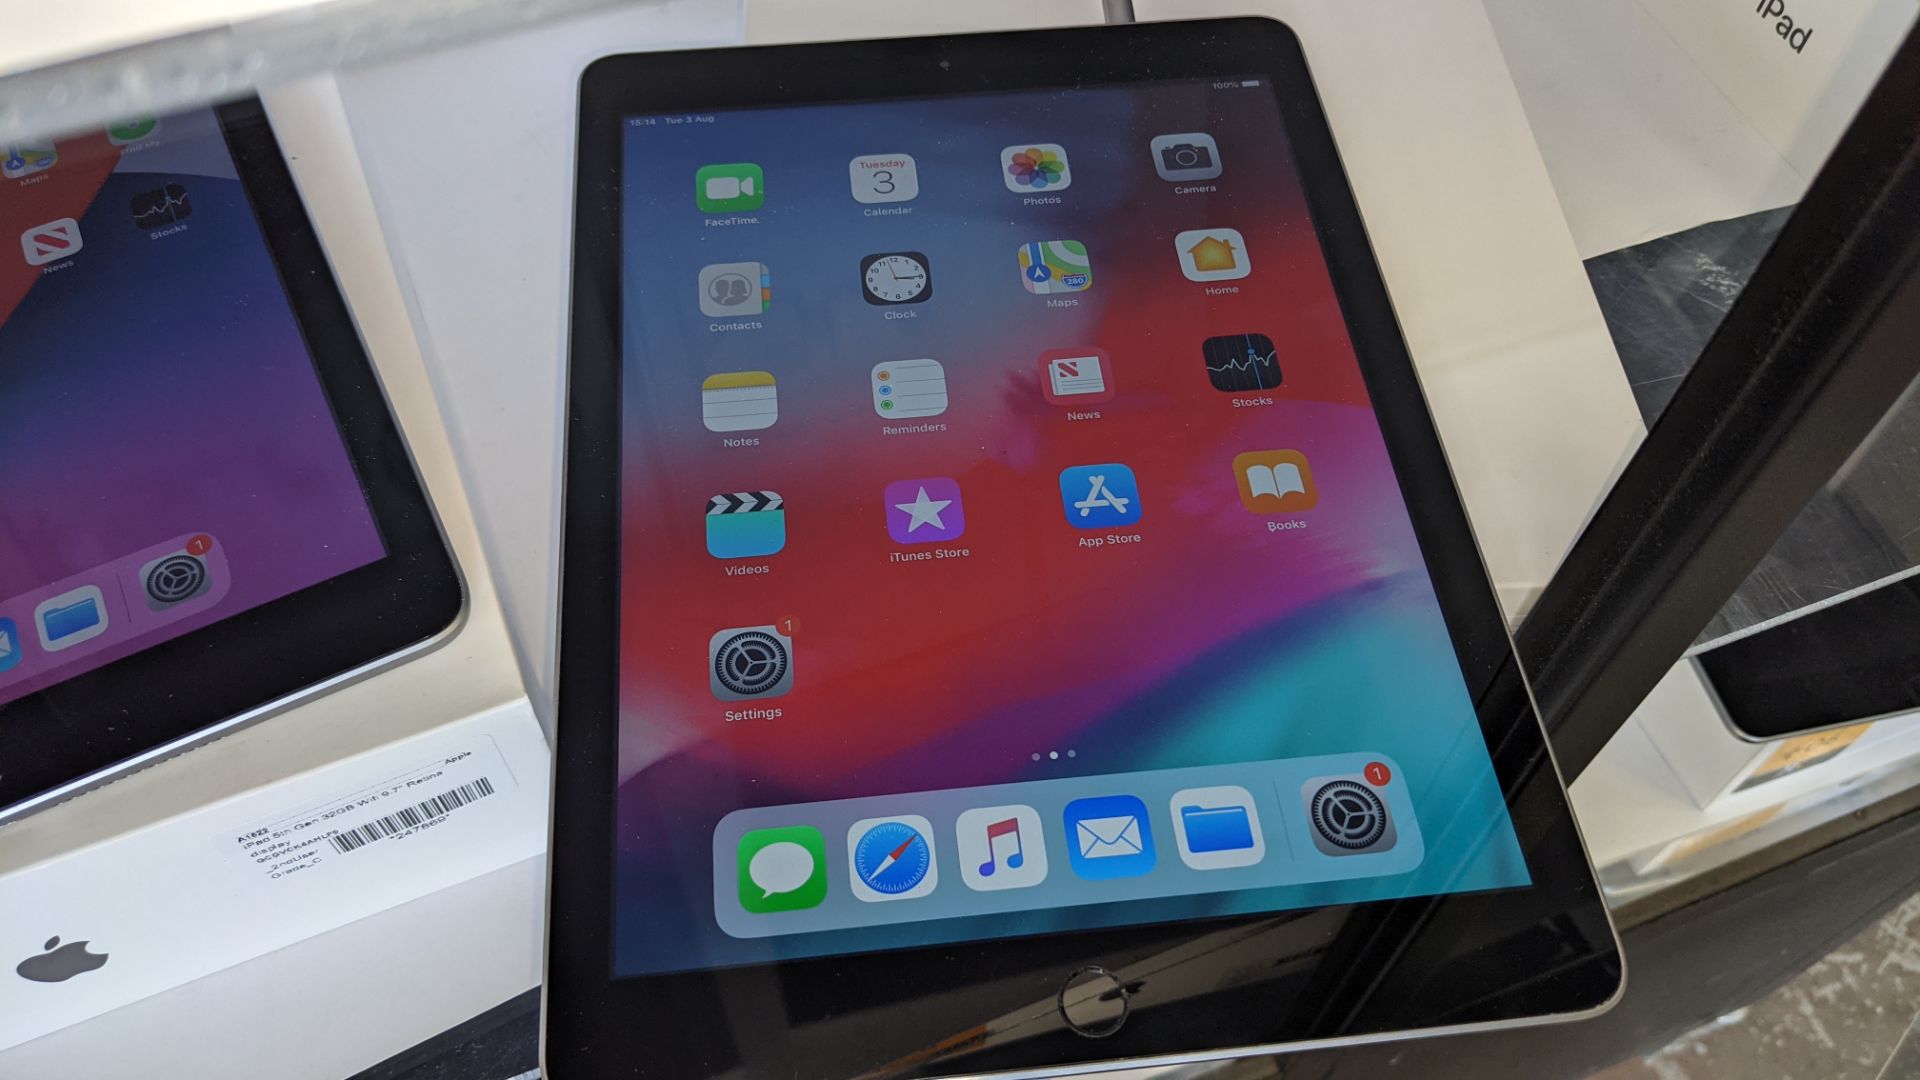 Apple iPad (space grey) 5th generation 32Gb Wi-Fi 9.7" Retina screen. Product code A1822. Apple A9